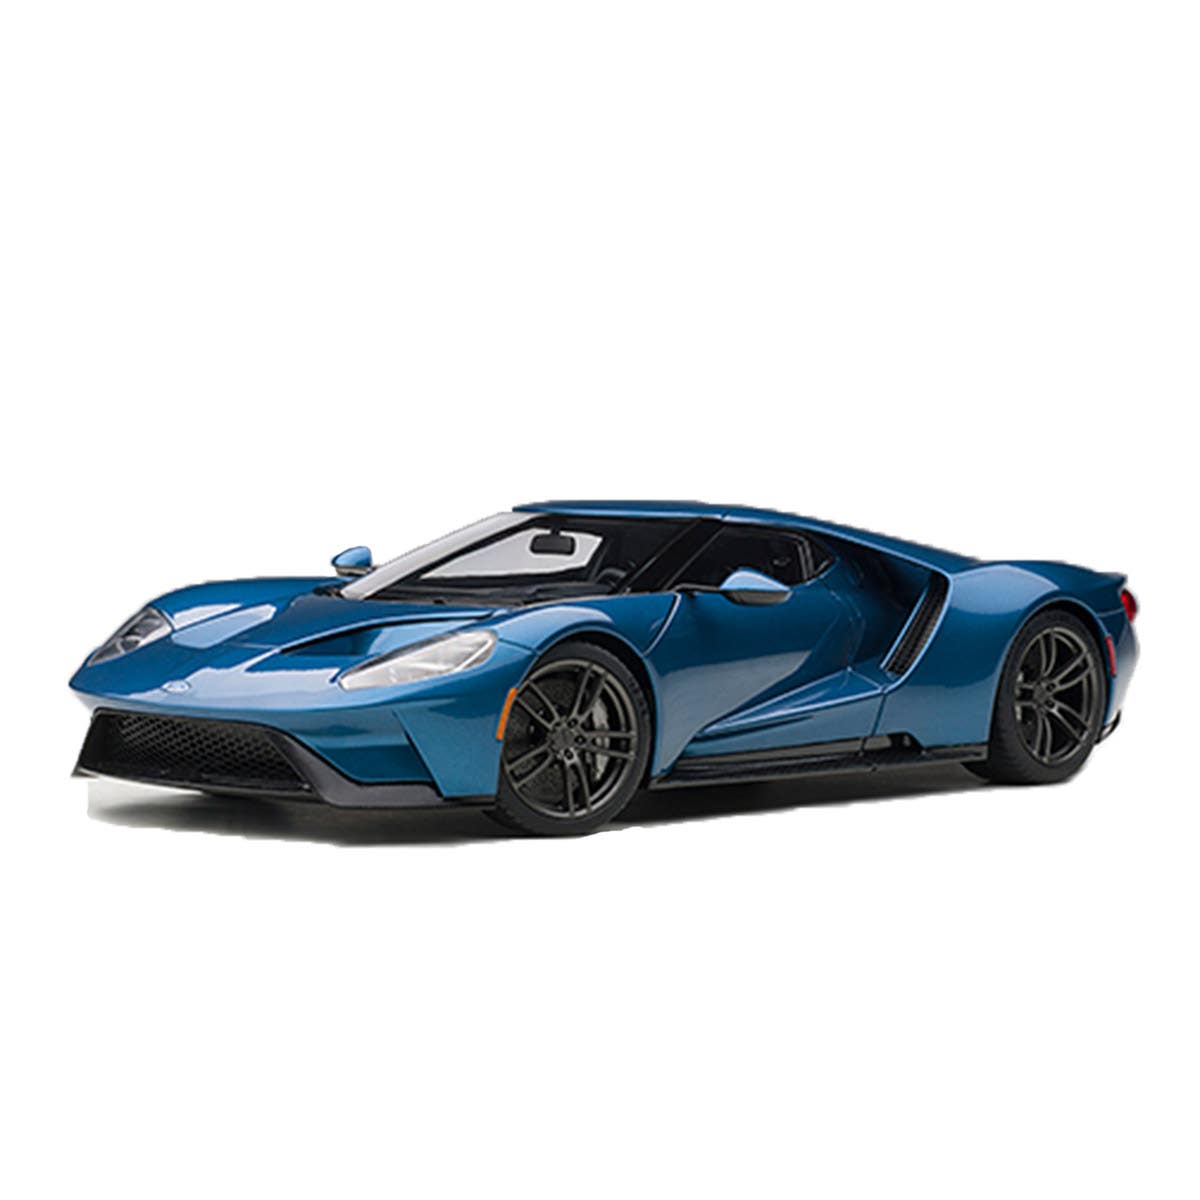 FORD GT 2017 (LIQUID BLUE) - 1:18 Scale Composite Model Car